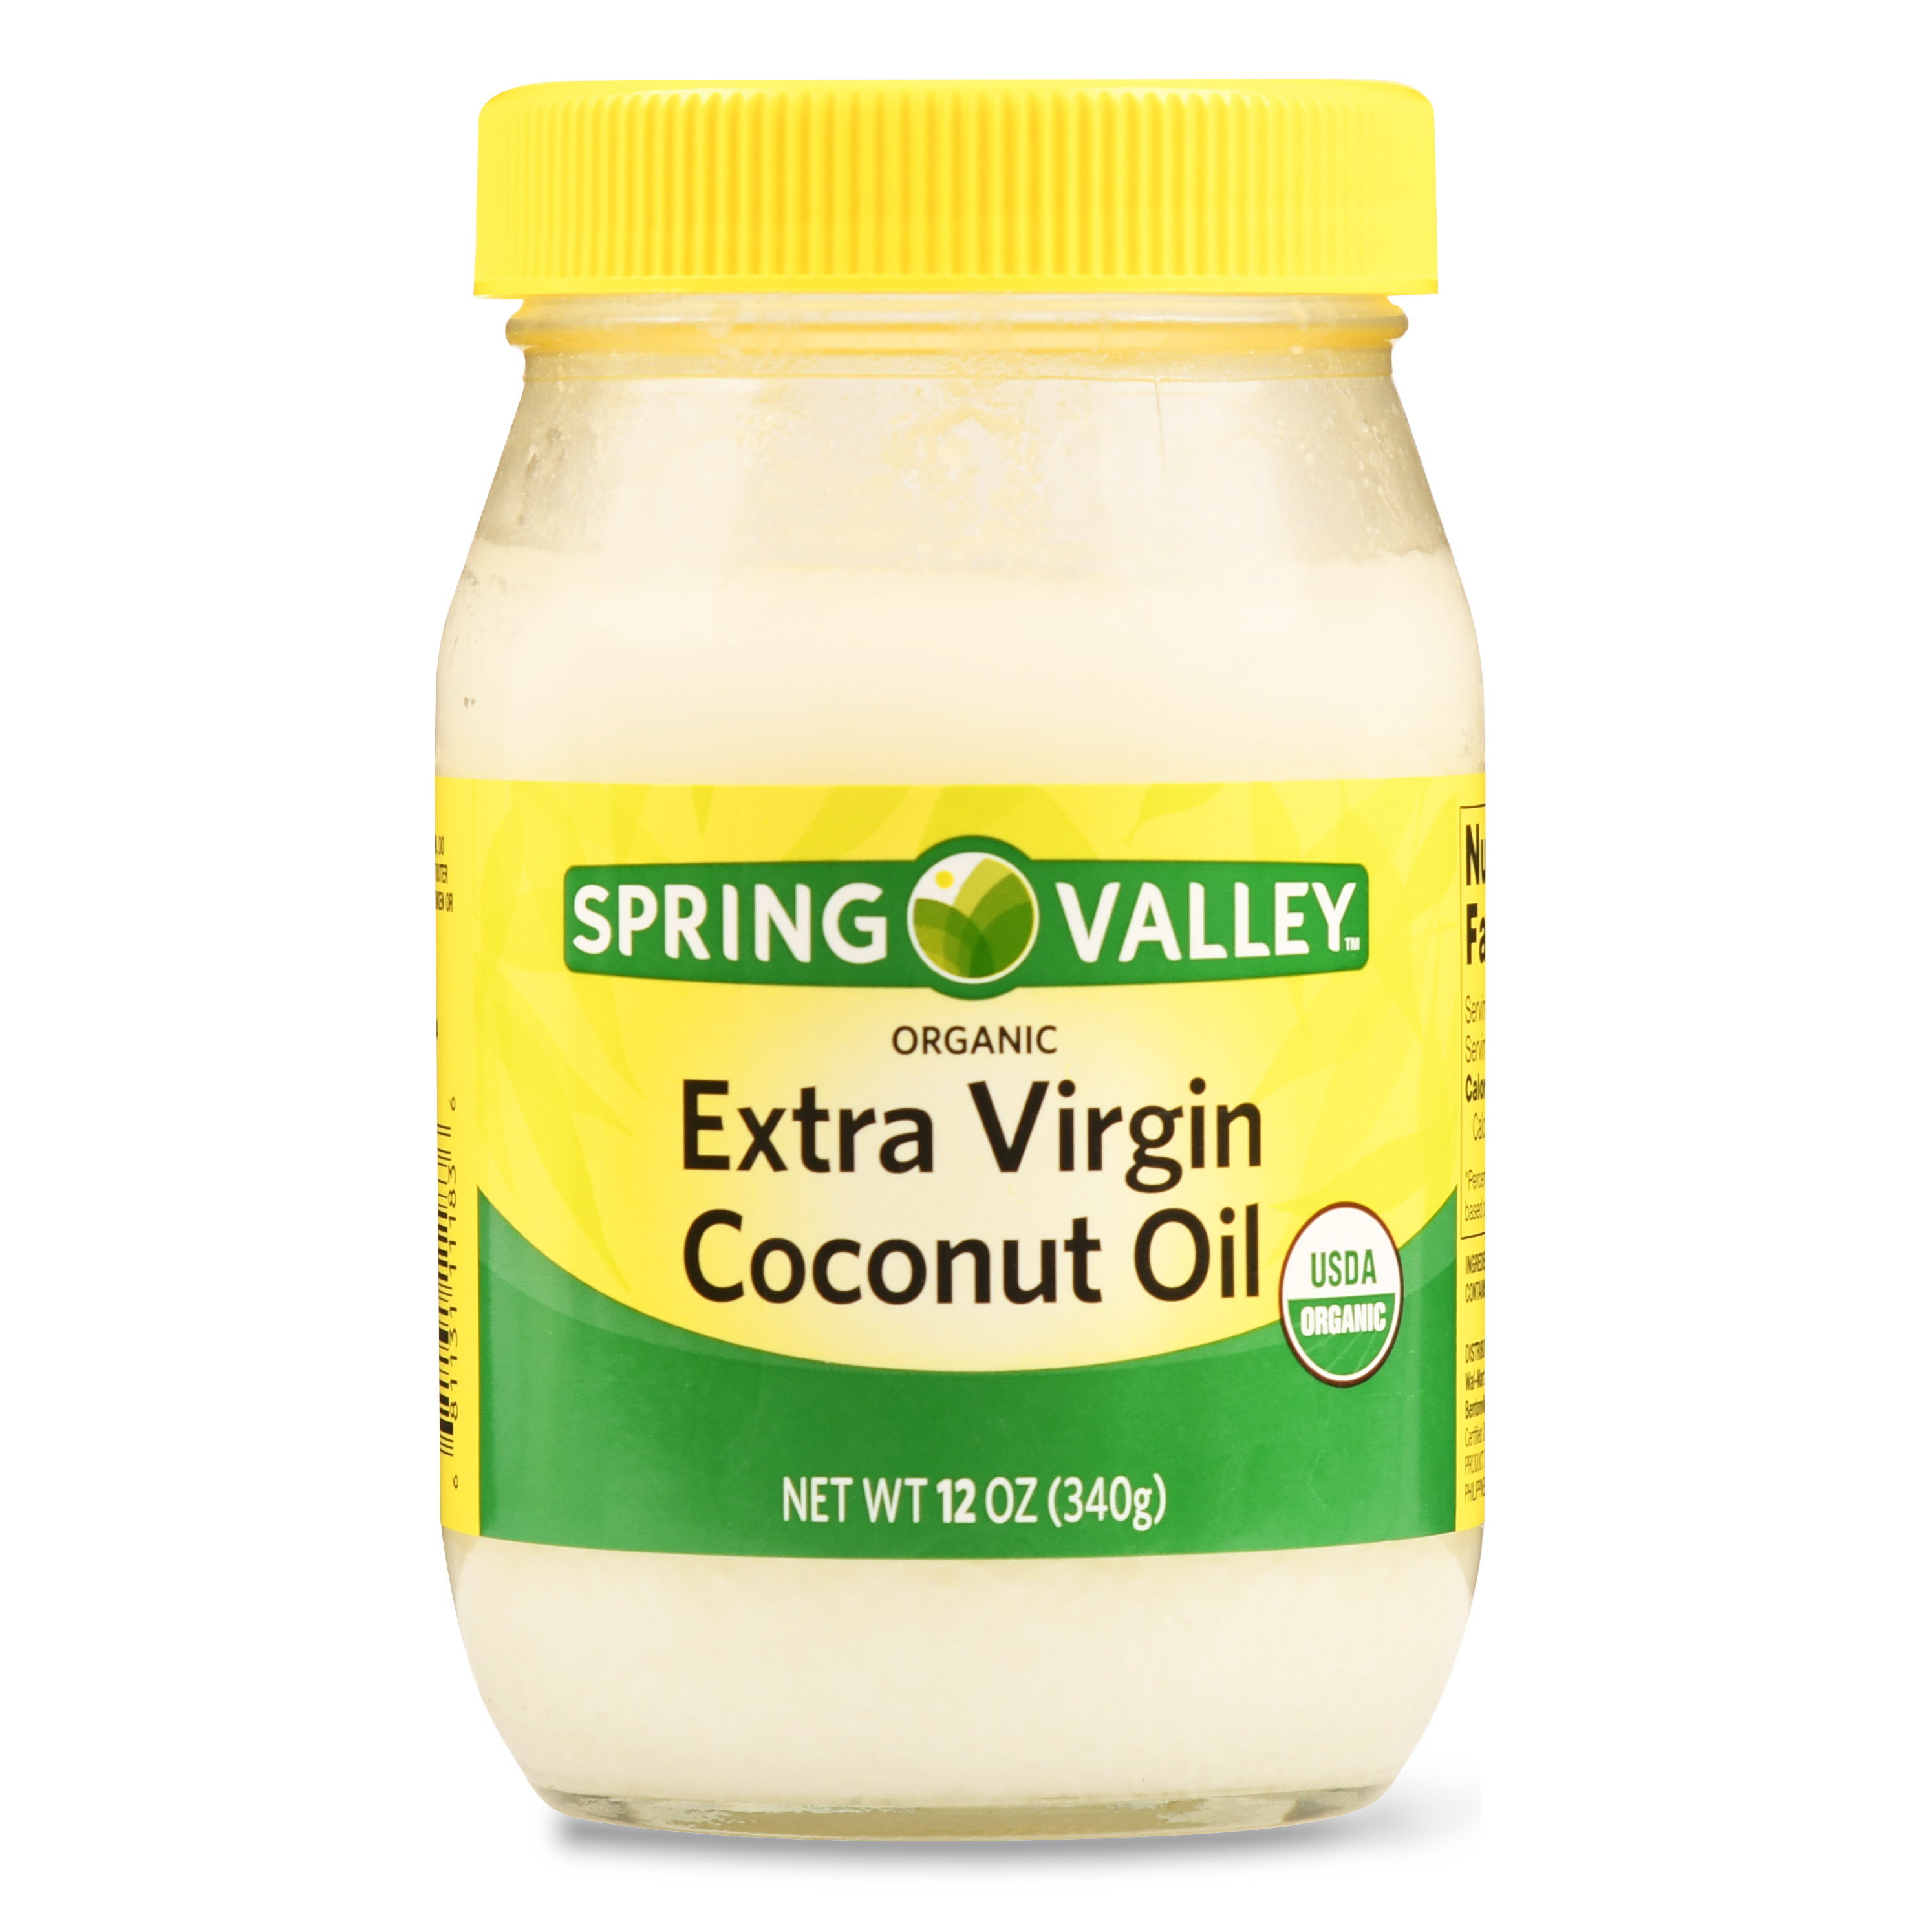 Spring Valley Organic Extra Virgin Coconut Oil, 12.0 Oz Image